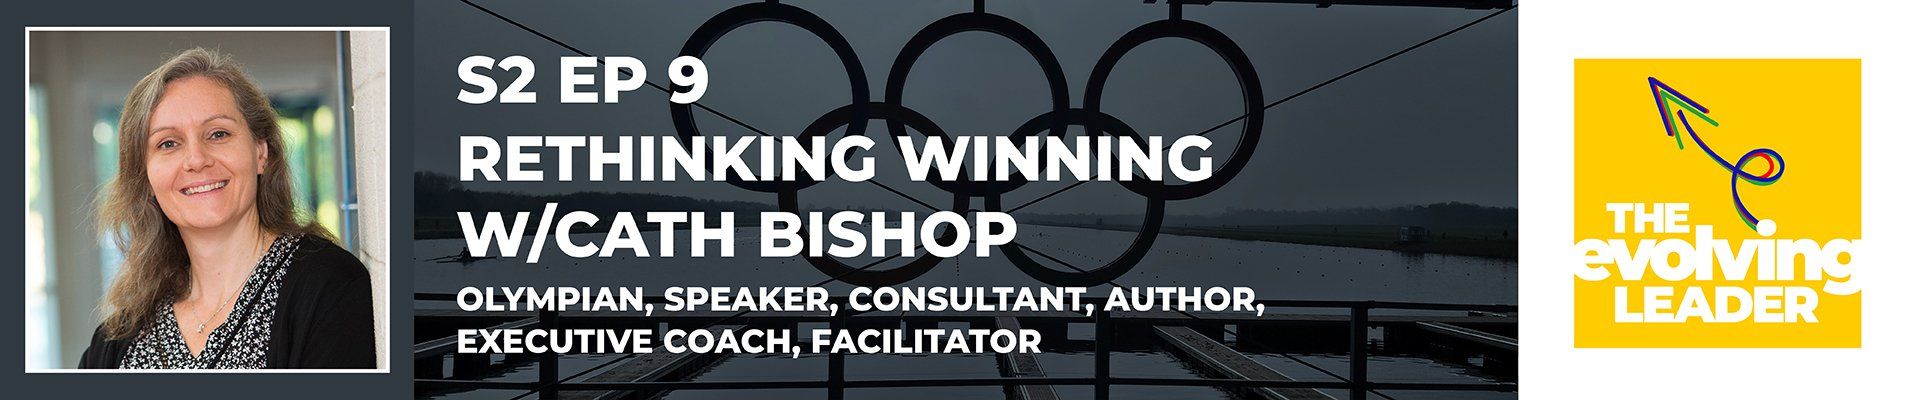 Cath Bishop Rethinking winning